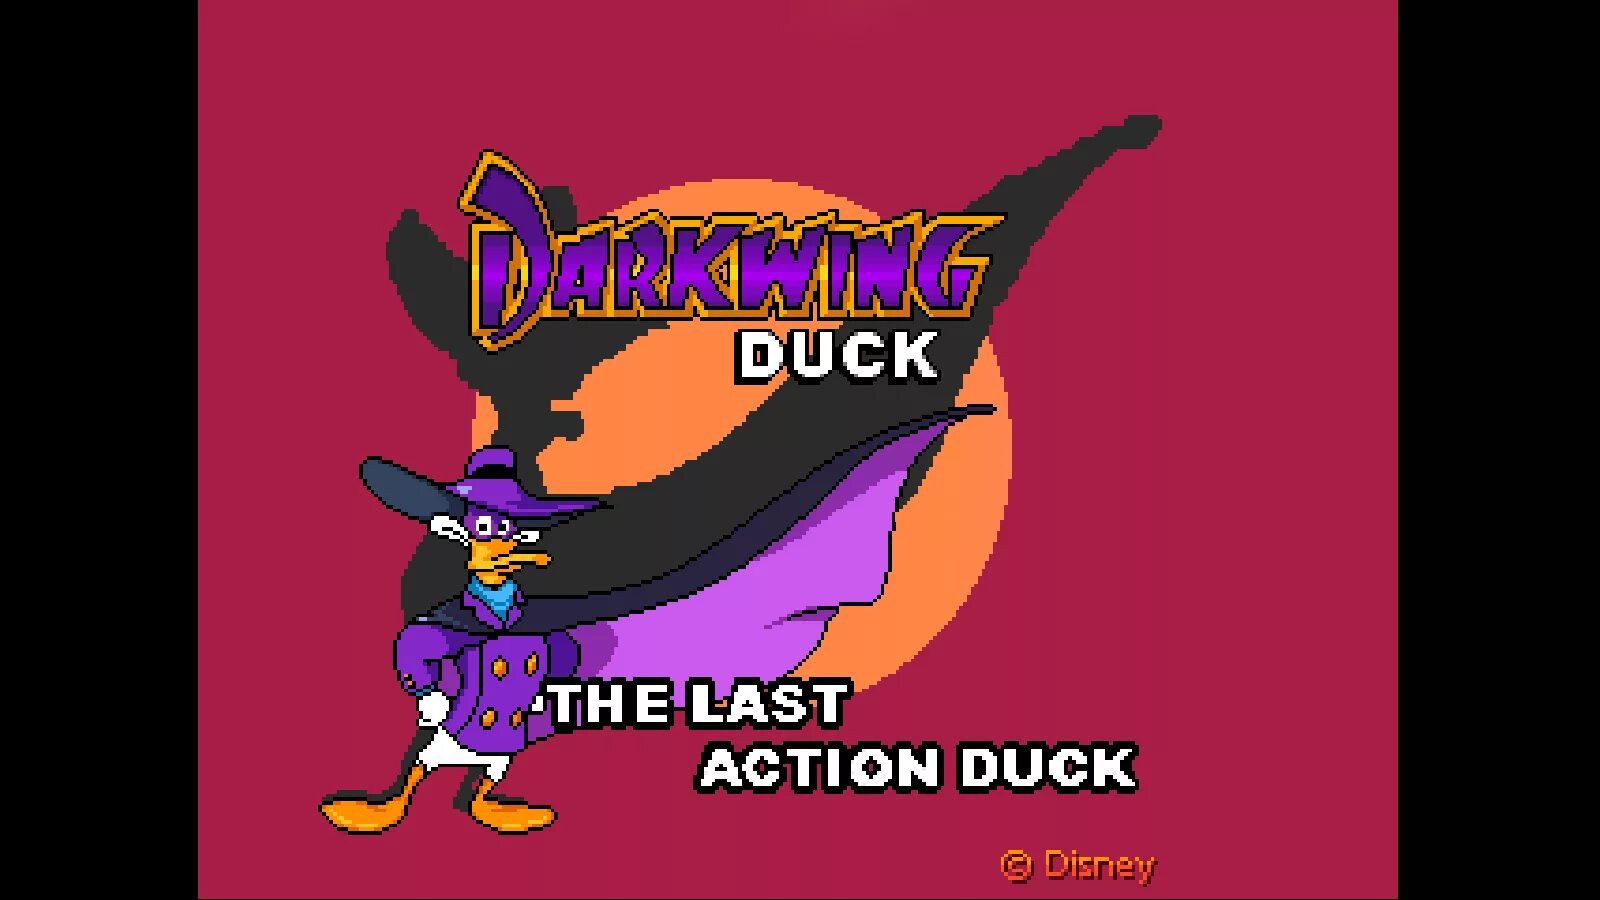 Darkwing duck capcom. Черный плащ Денди. Darkwing Duck игра. Черный плащ NES. Черный плащ Sega.